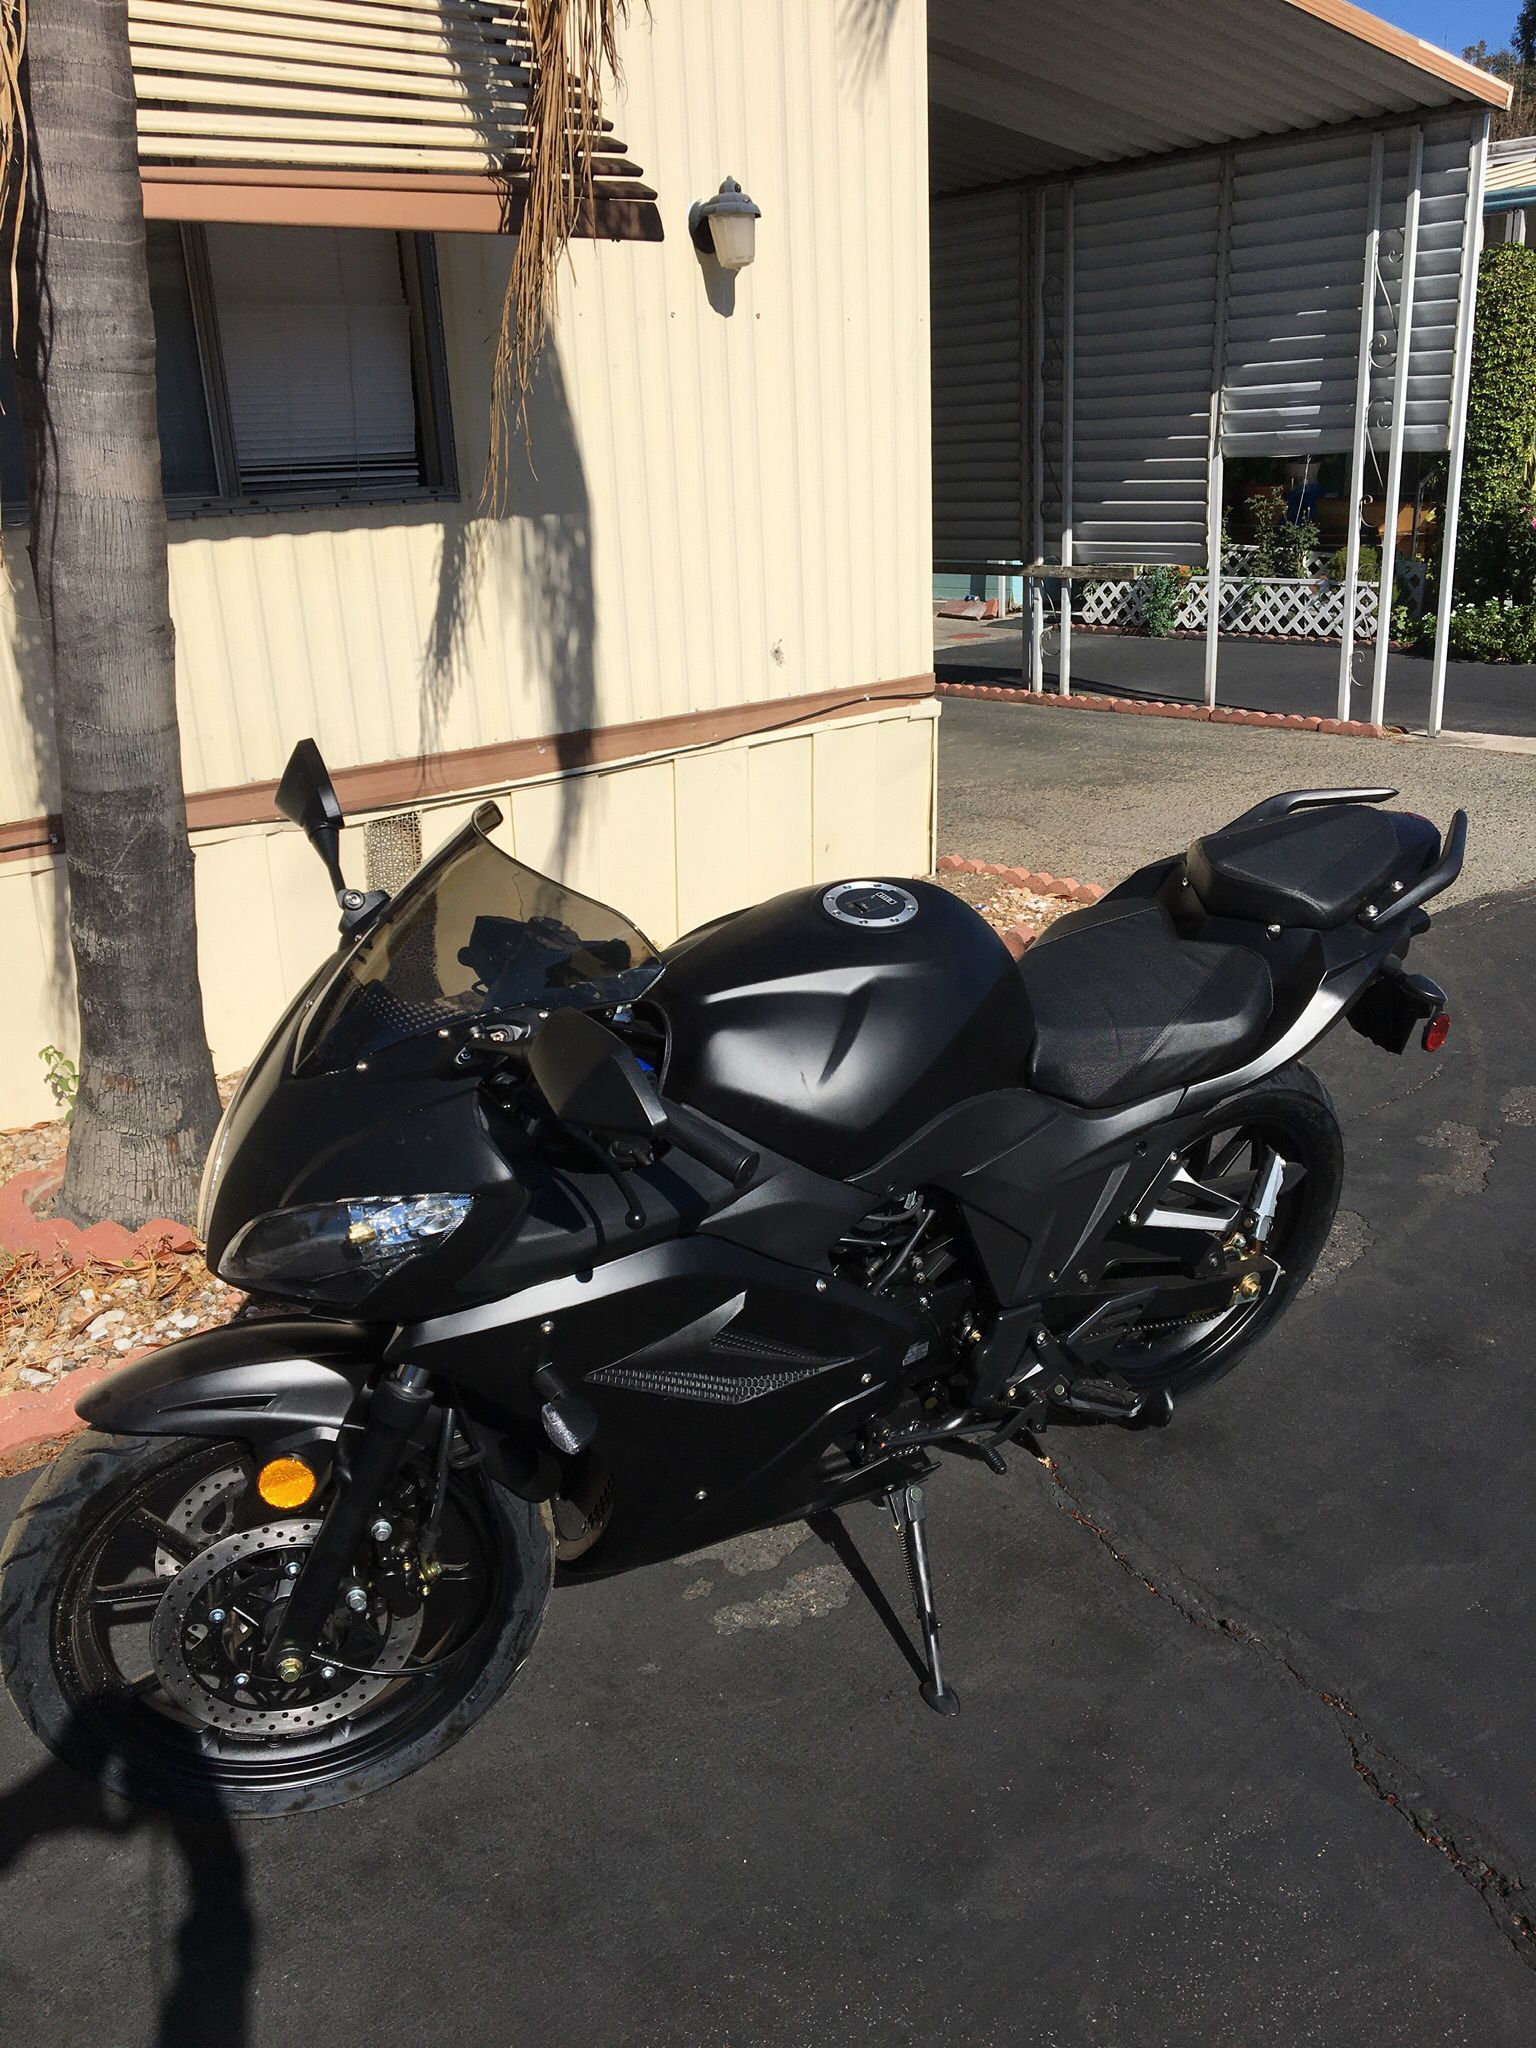 125cc Ninja Motorcycle